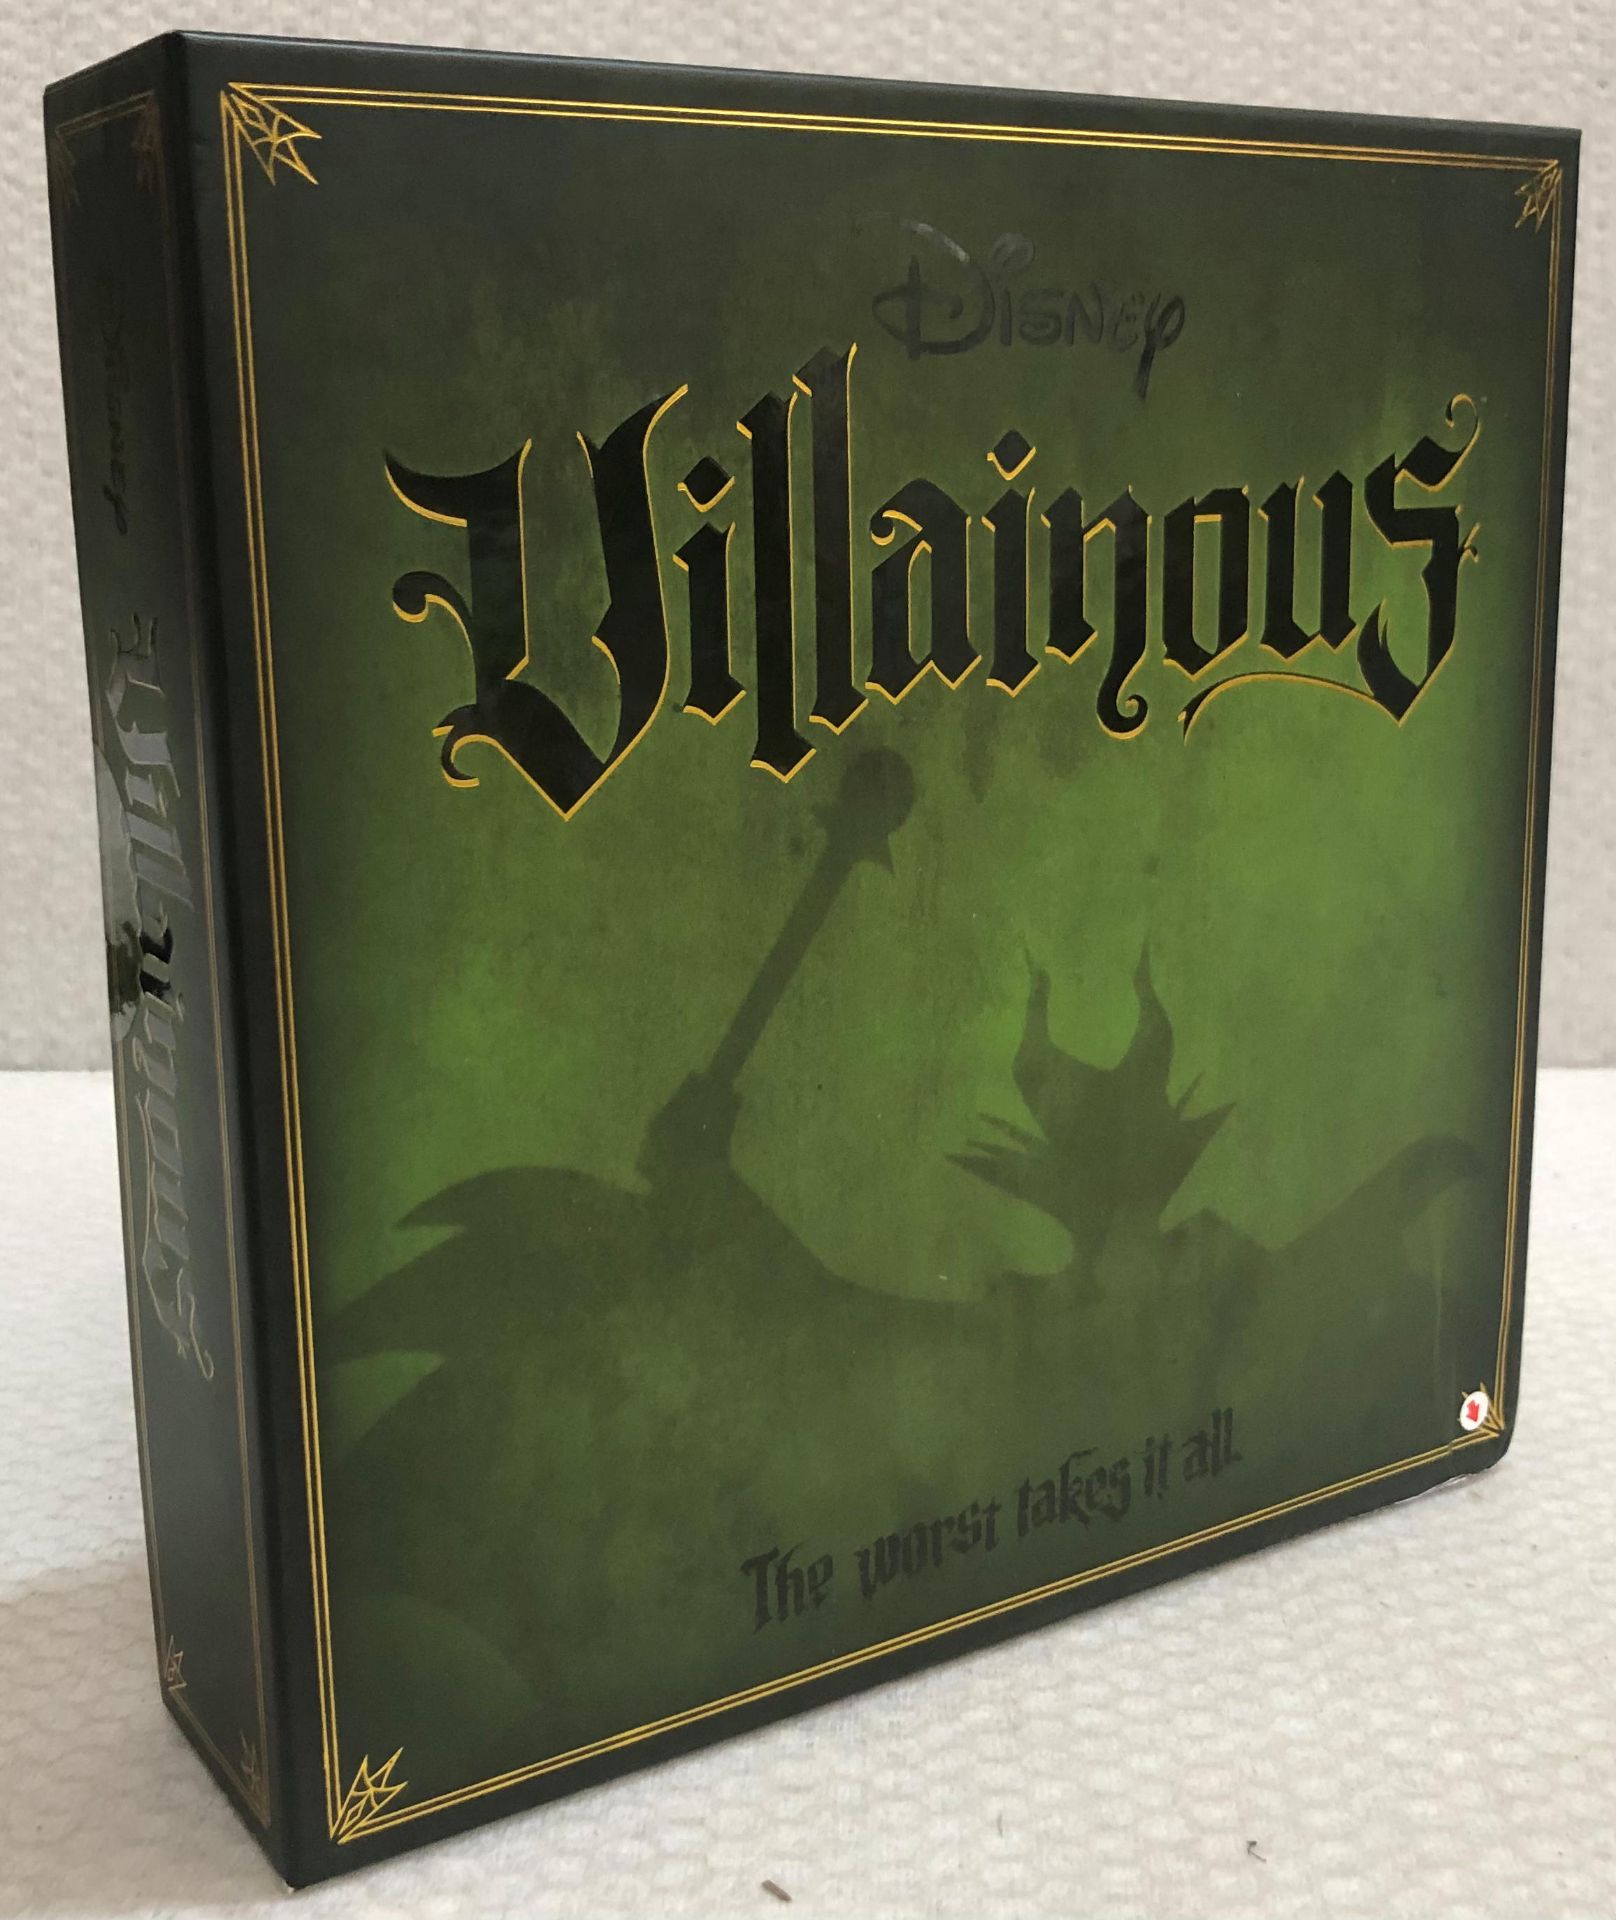 1 x Disney Villanous Board Game - New/Boxed - HTYS307 - CL987 - Location: Altrincham WA14 - RRP: £ - Image 2 of 4